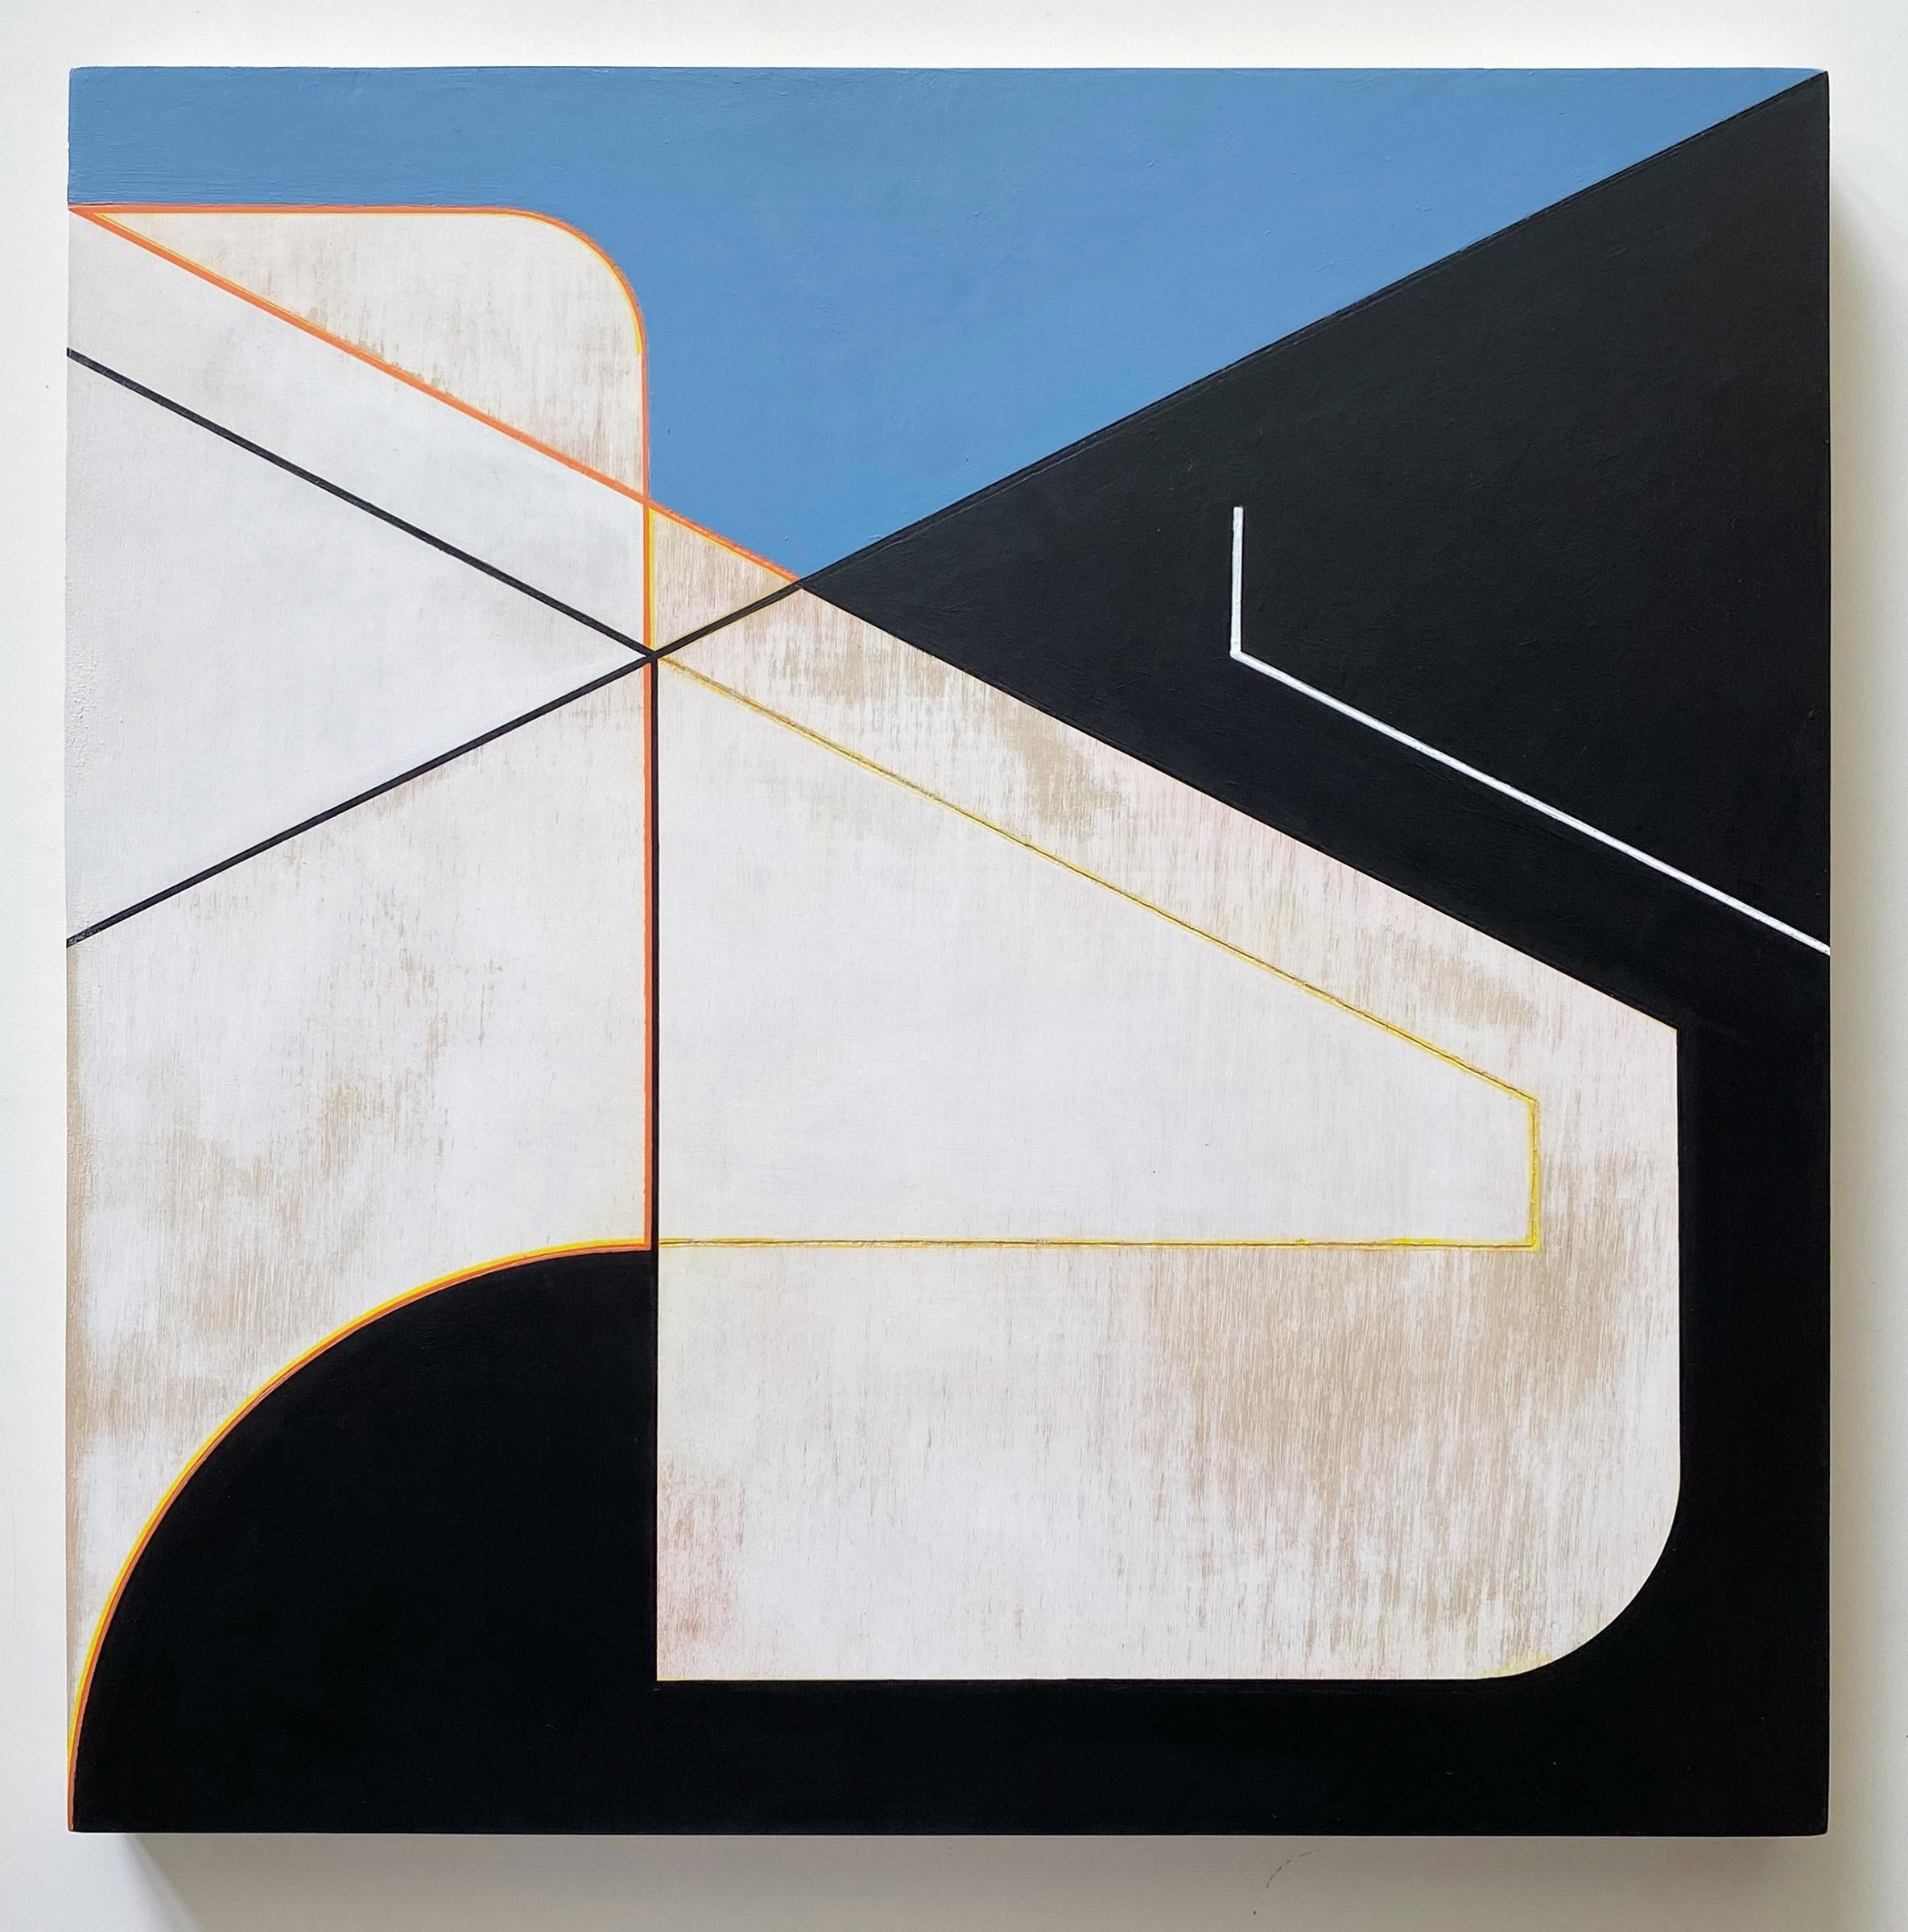 '12x12 No. 5' - Contemporary Constructivism - Abstract - Josef Albers - Constructivist Painting by Vera Pawelzik